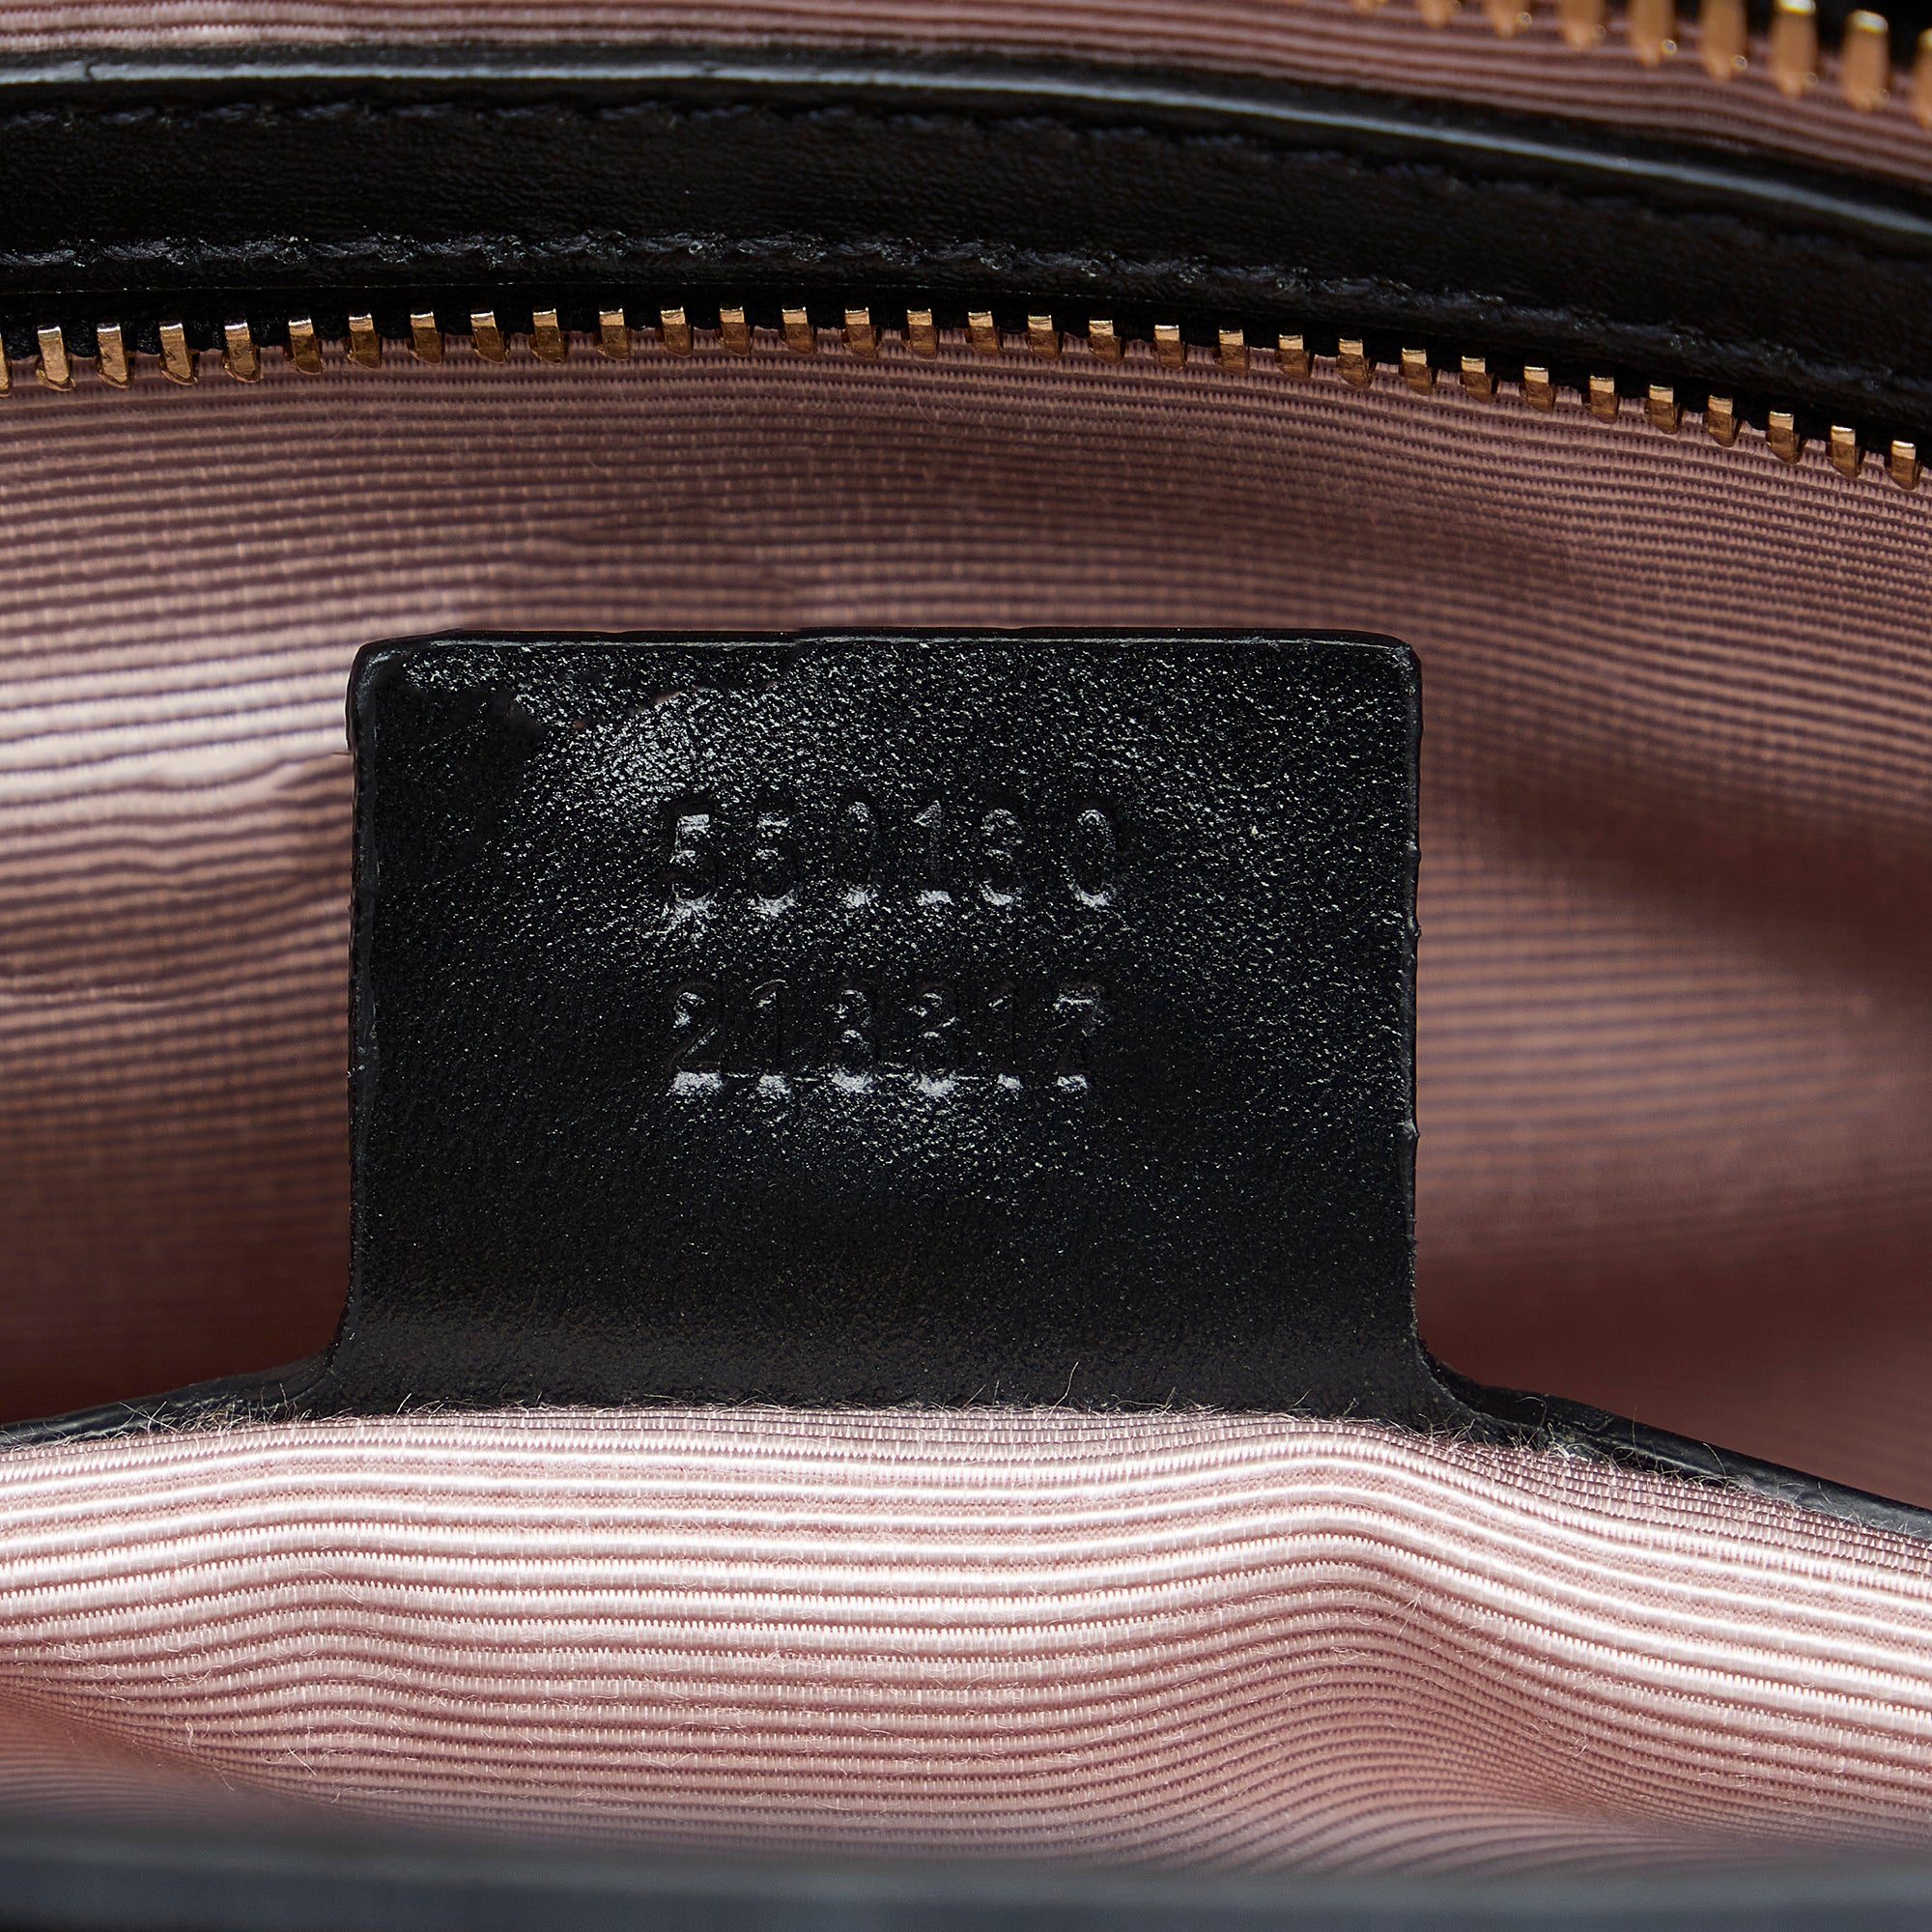 Arli leather handbag Gucci Brown in Leather - 25925961